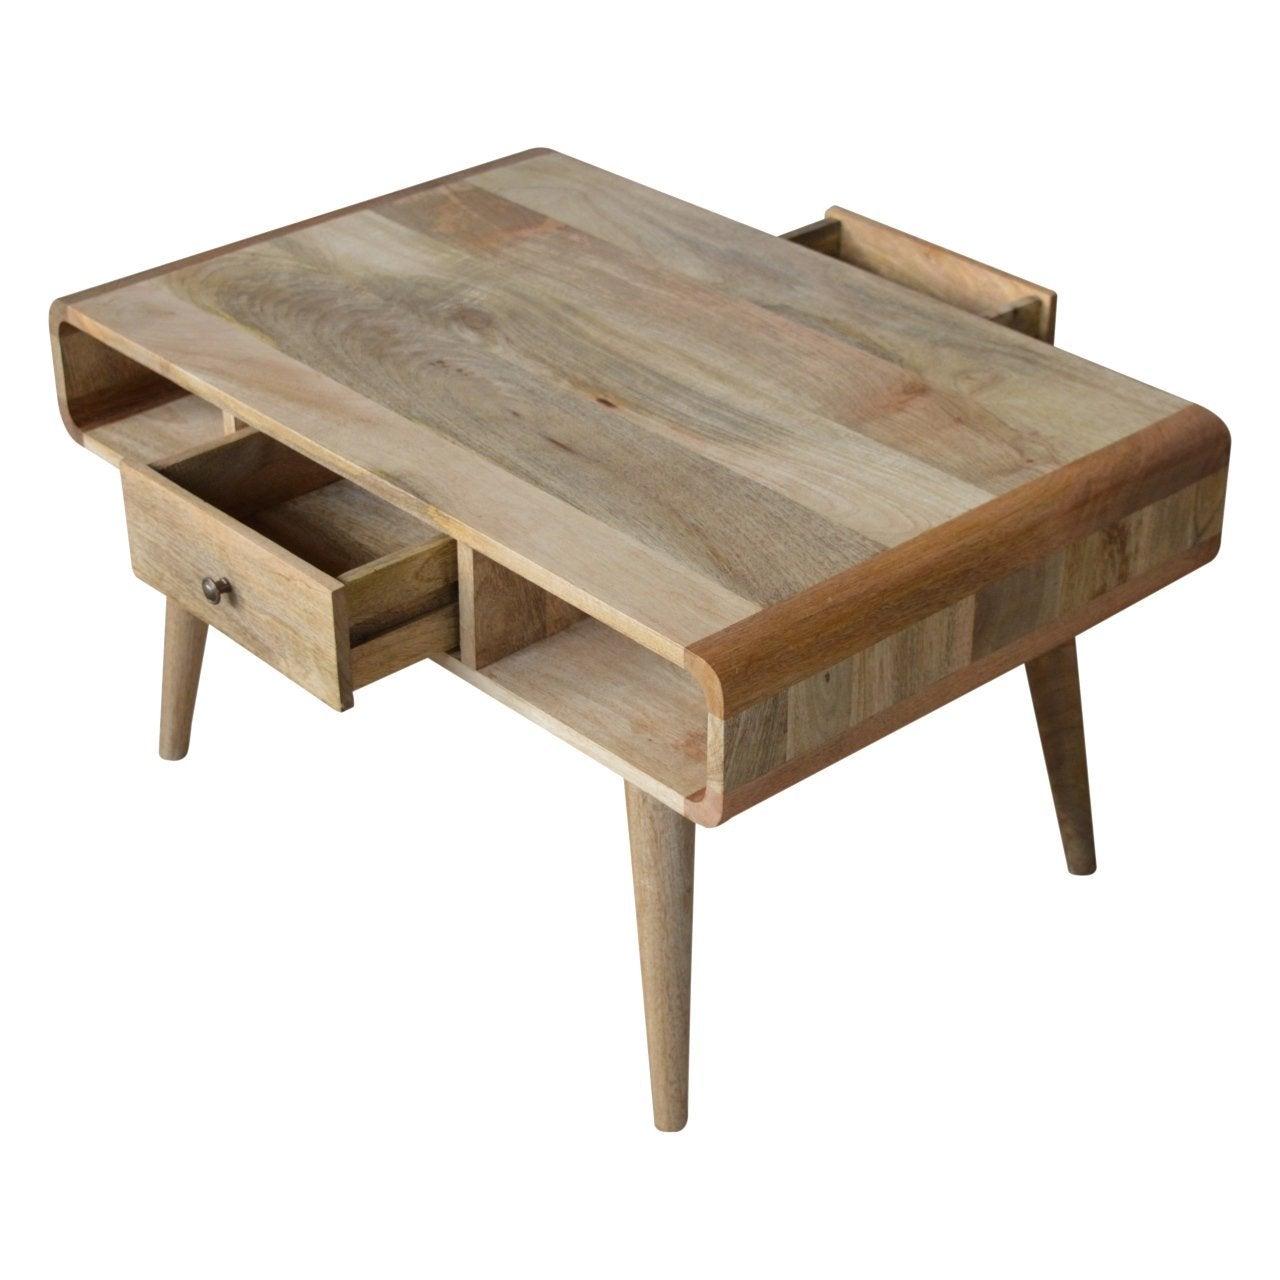 Curved oak-ish coffee table - crimblefest furniture - image 8